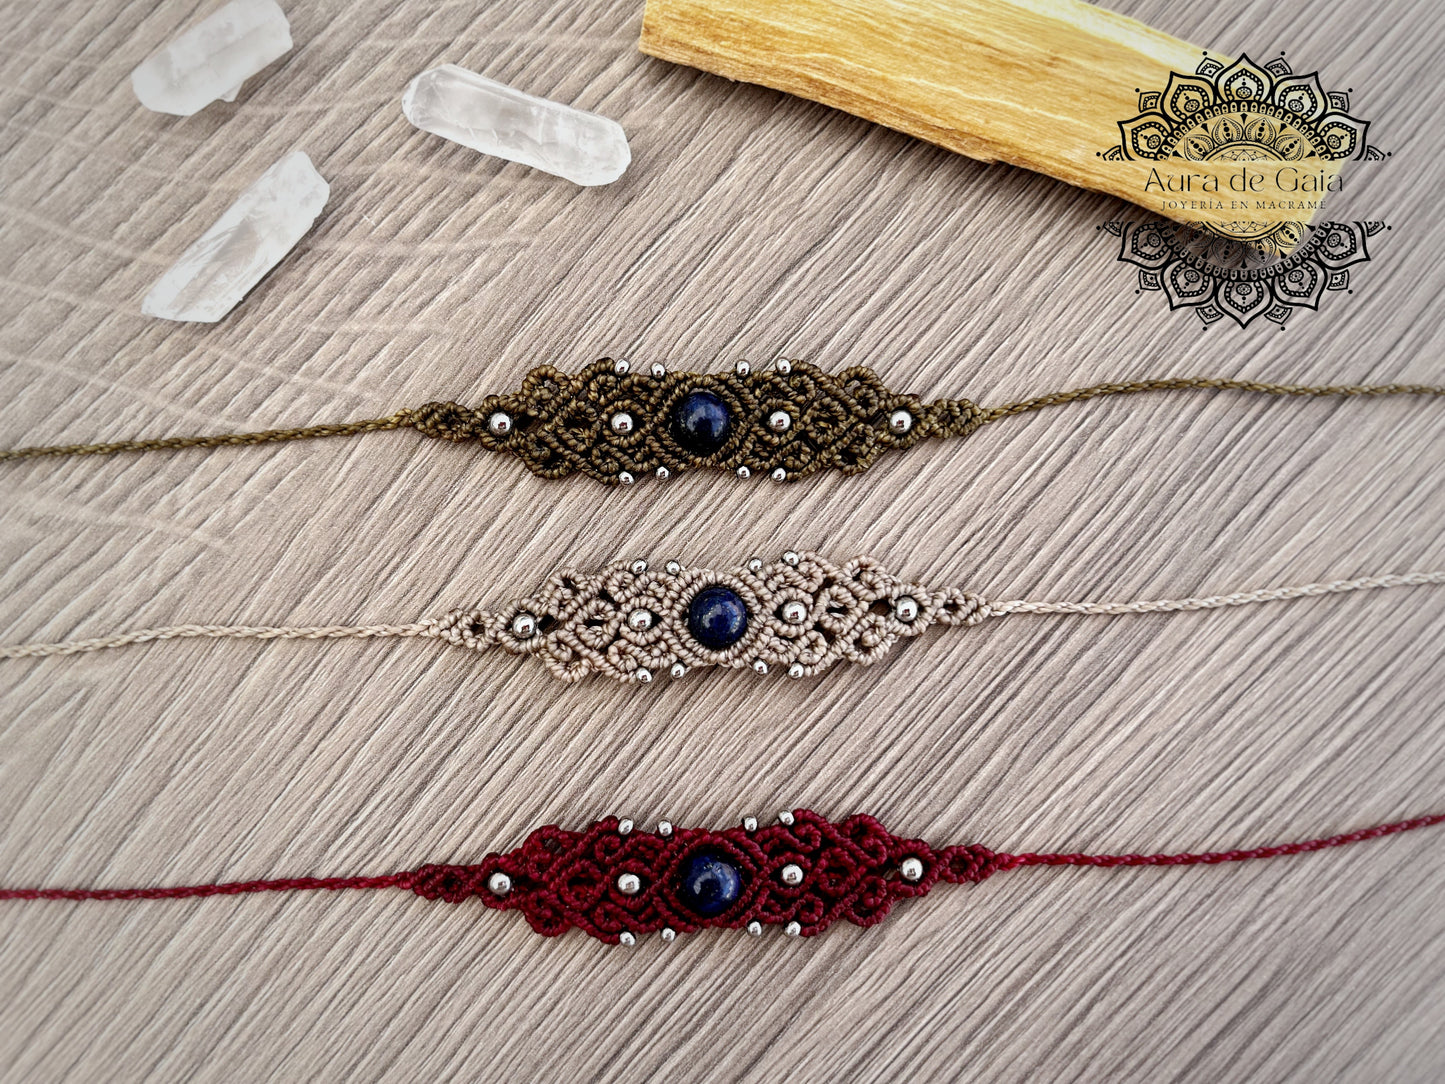 Pulsera Boho Hippie con Lapislázuli y Acero Inoxidable en Macrame - Boho Hippie Bracelet with Lapis Lazuli and Stainless Steel Beads by Macrame